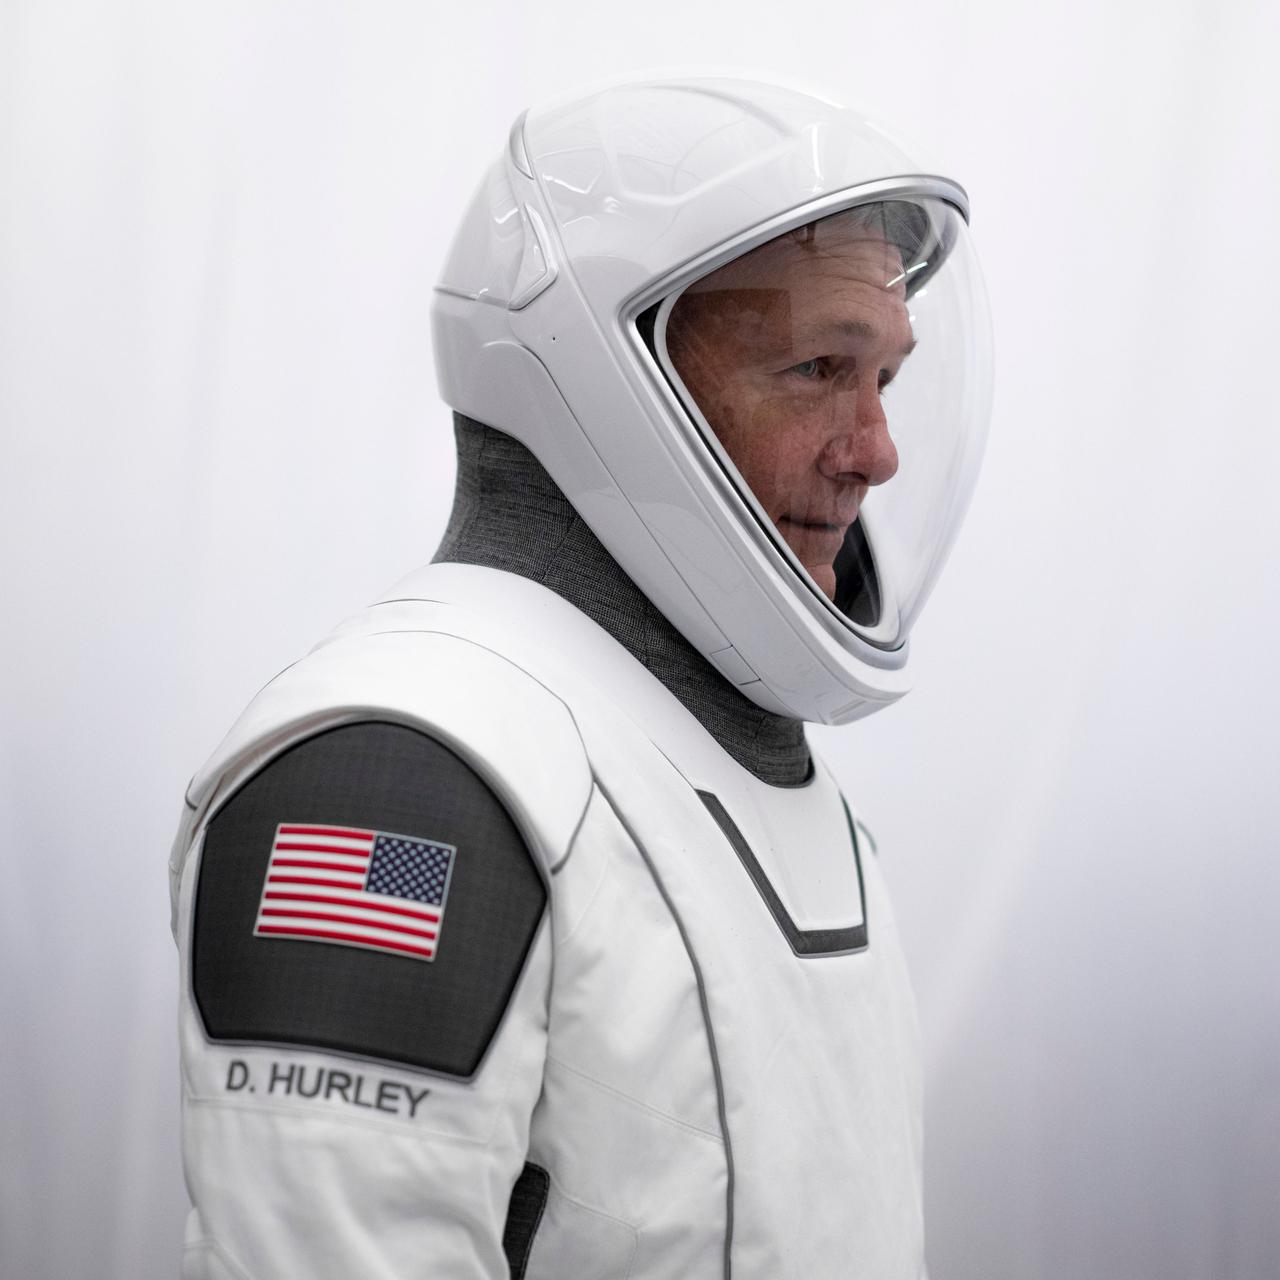 SpaceX宇航服竟然是由蝙蝠侠服装设计师监制的